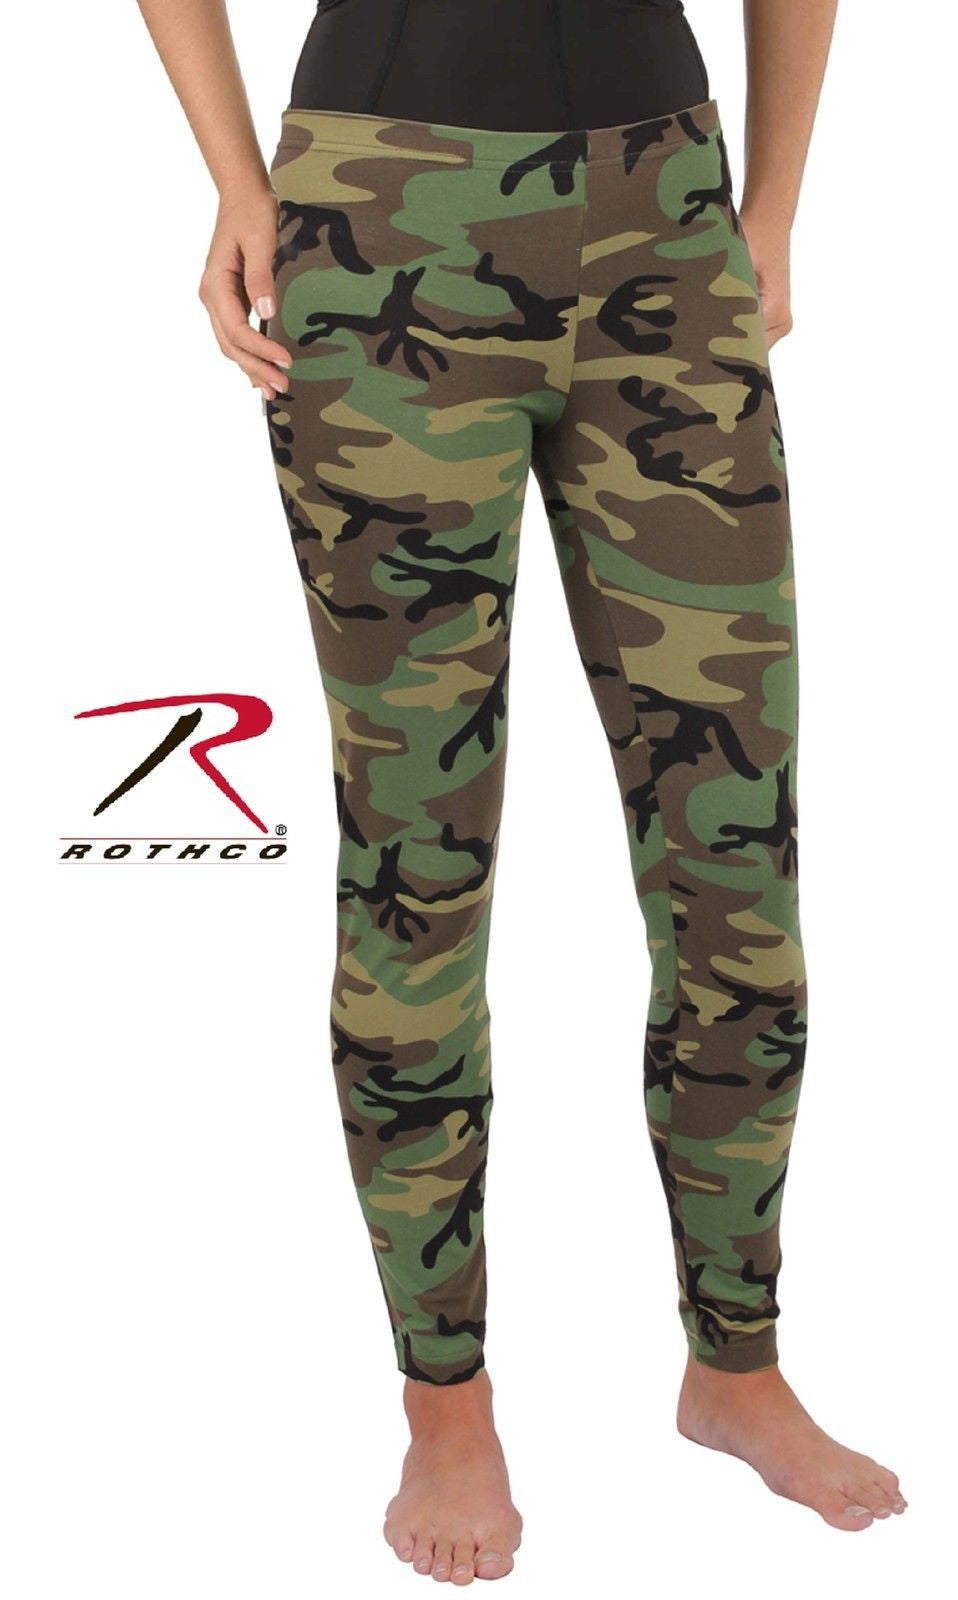 Womens Camouflage Leggings - Snug Cotton Spandex Classic Camo